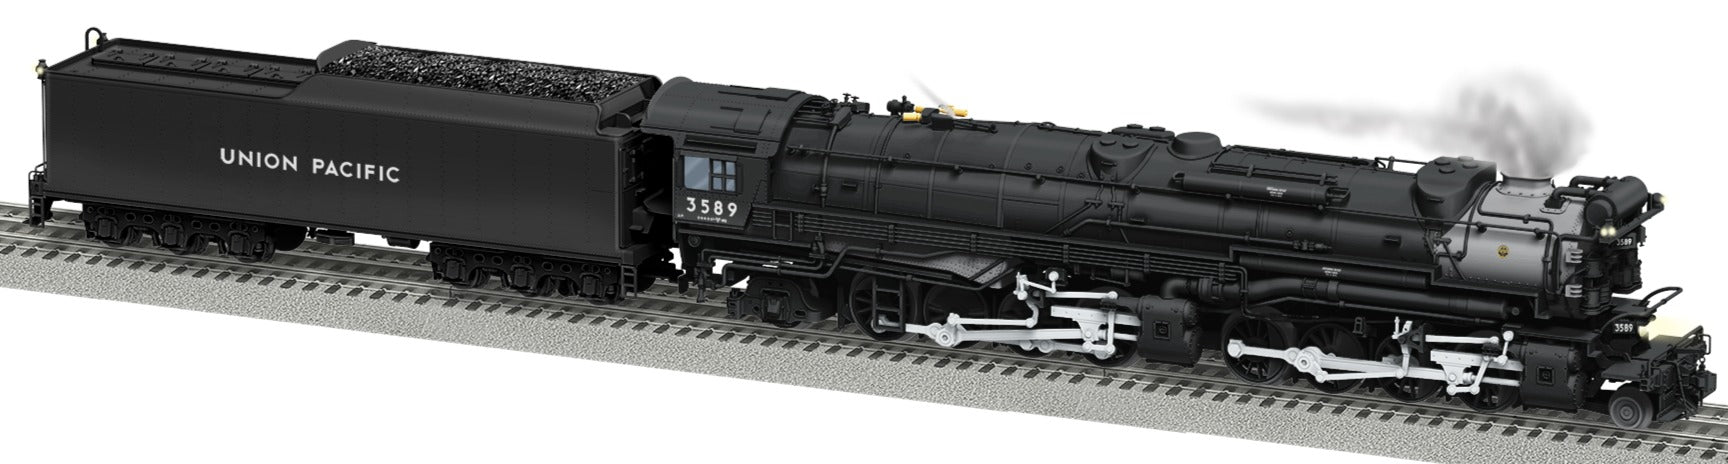 Lionel 2431611 - Legacy H7 2-8-8-2 Steam Locomotive "Union Pacific" #3589